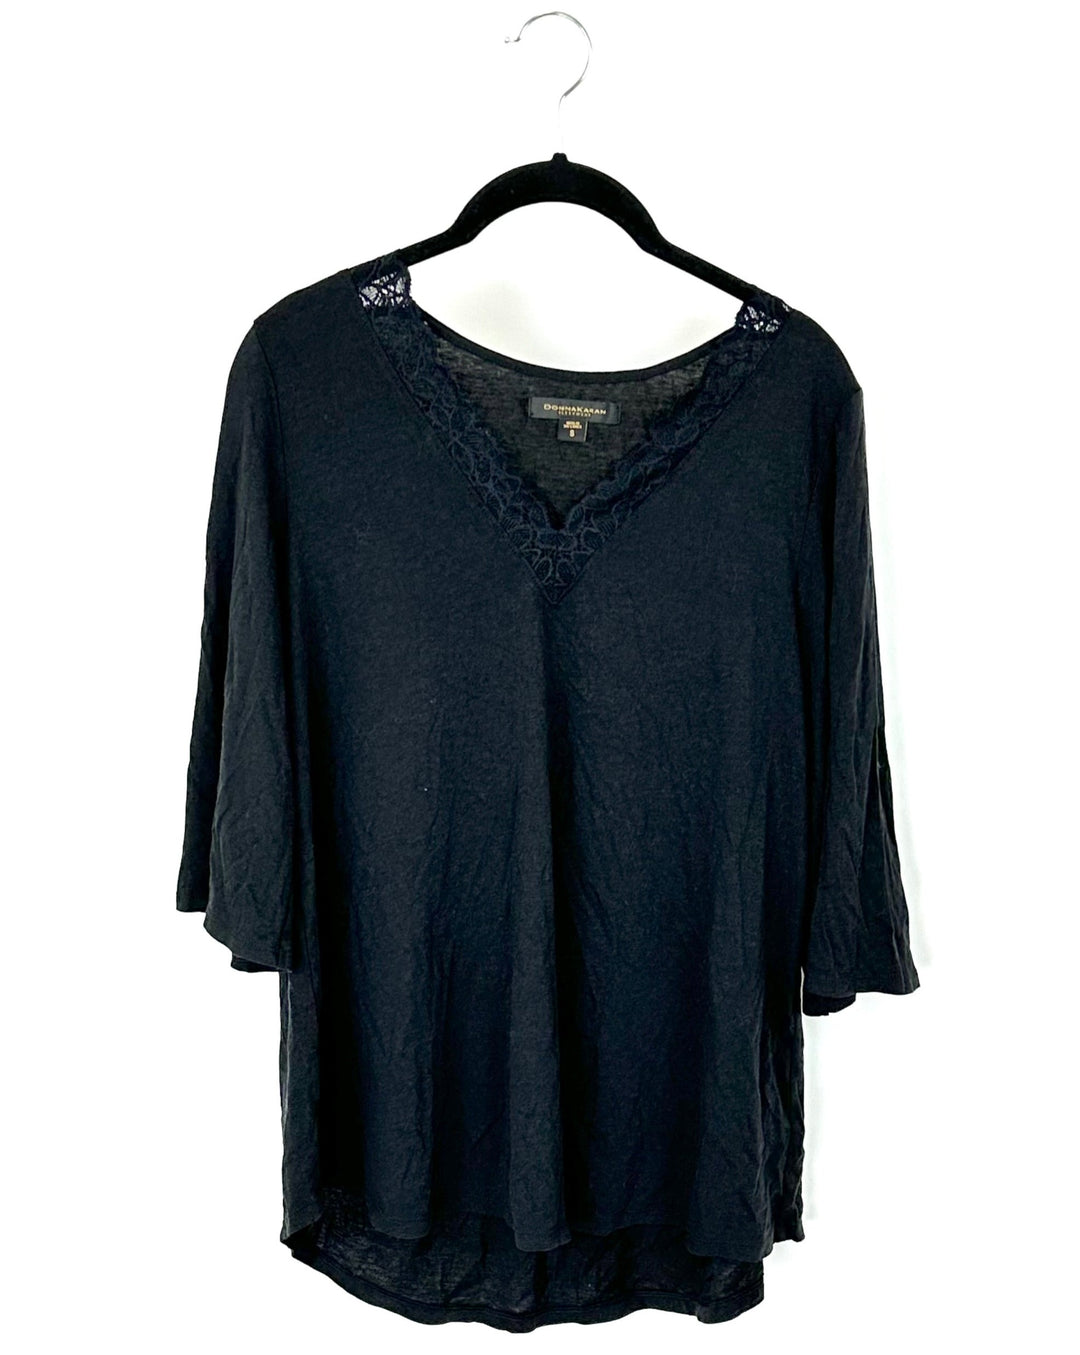 Black Long Sleeve Sleep Shirt - Small